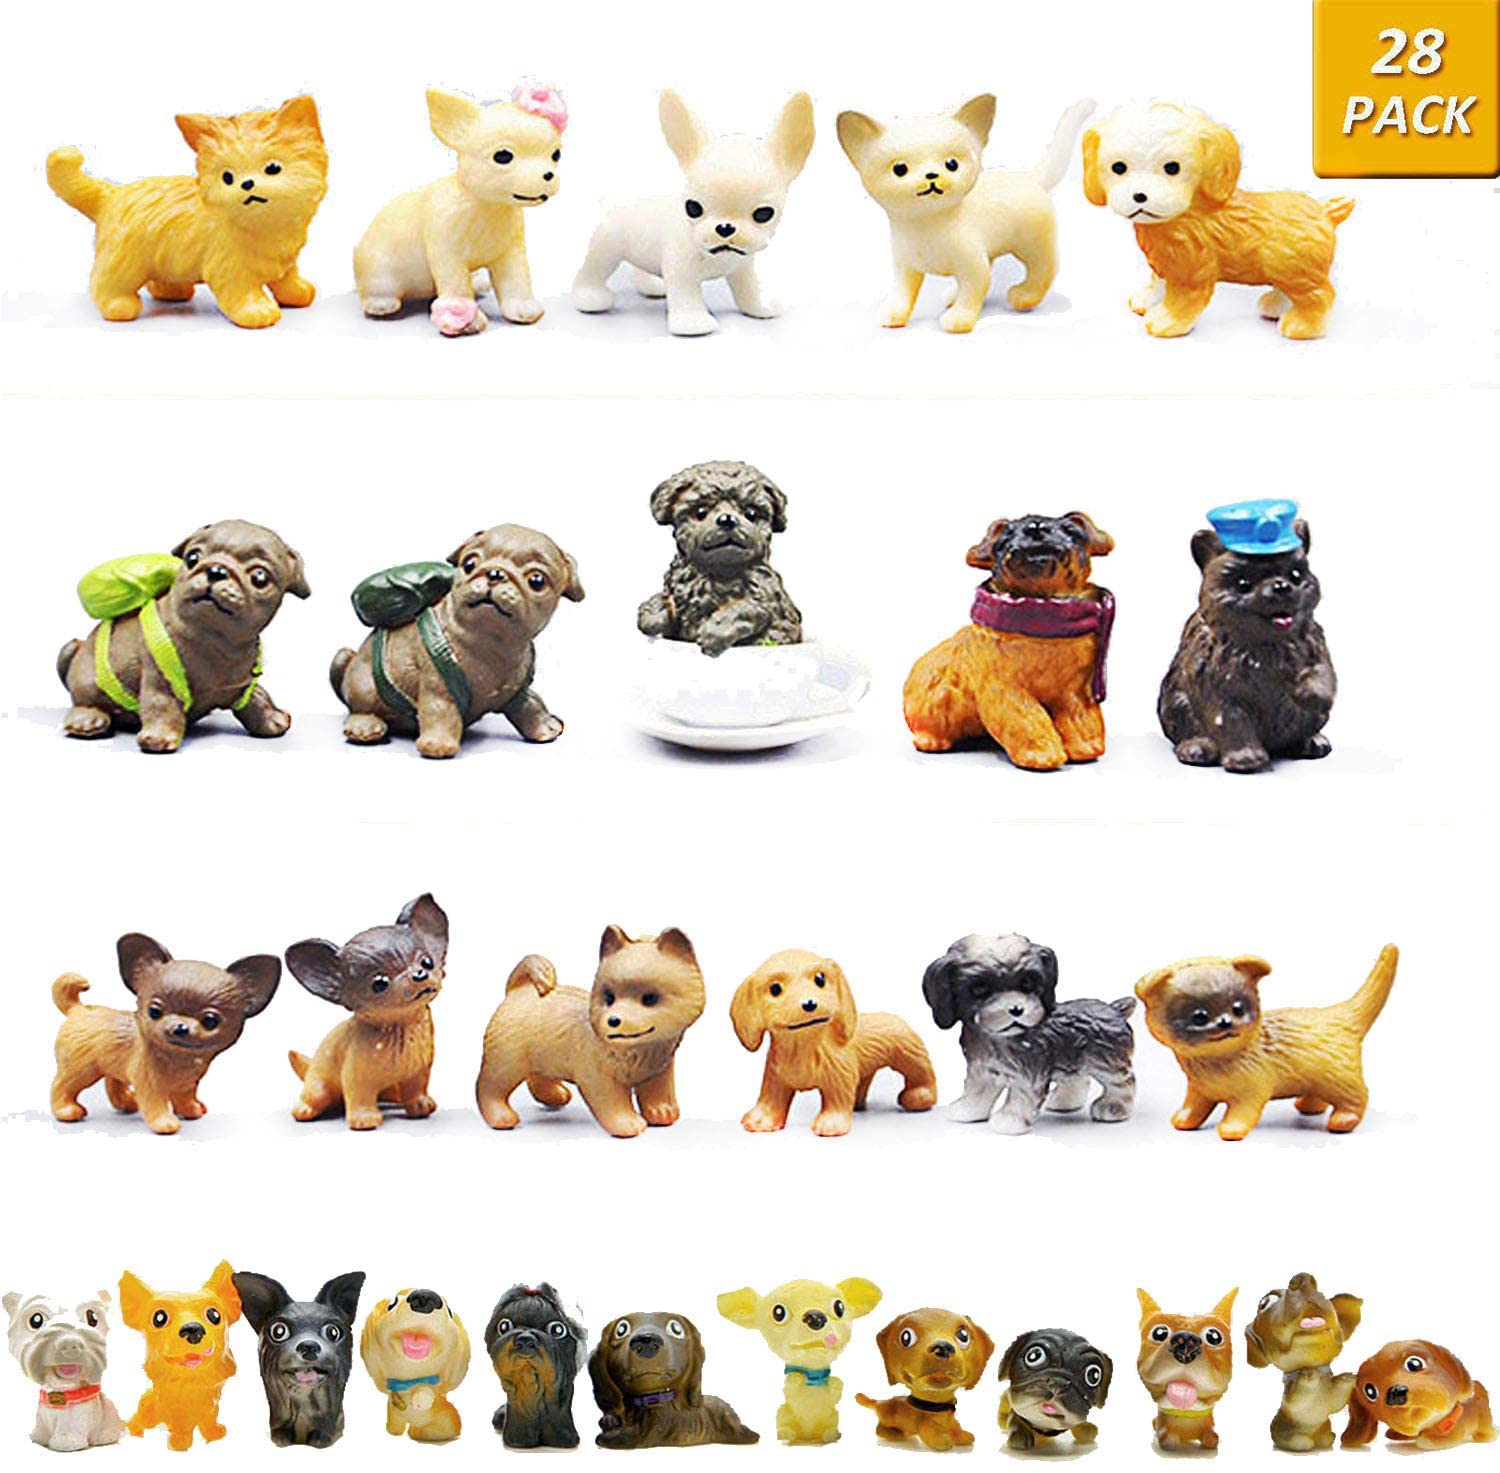 WIOR Mini Dog Figurines, 12PCS Realistic Puppy Indonesia